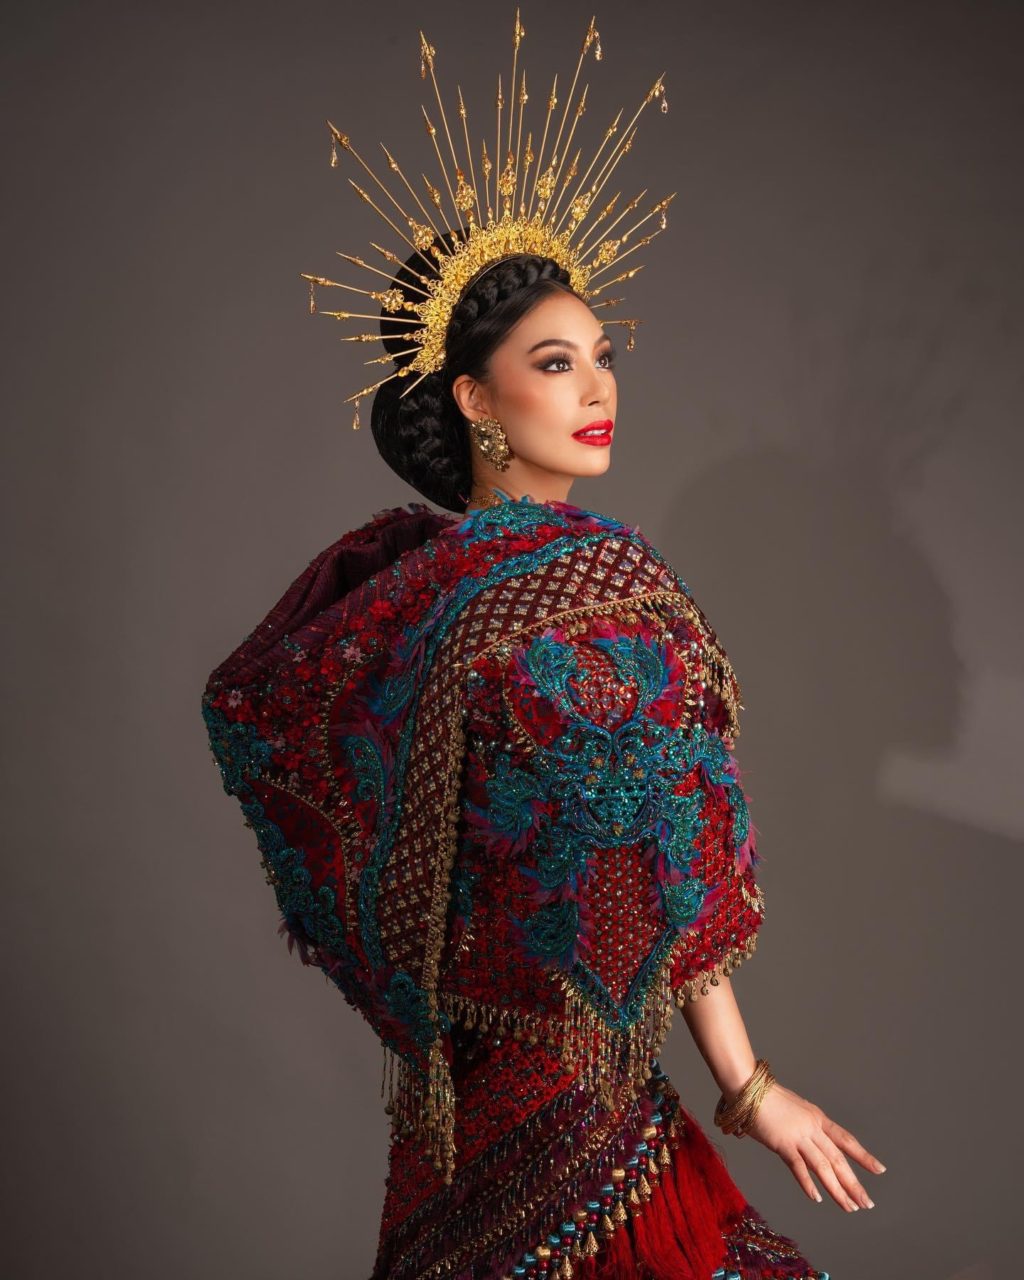 LOOK: Dindi Pajares’ Miss Supranational 2021 national costume | Cebu ...